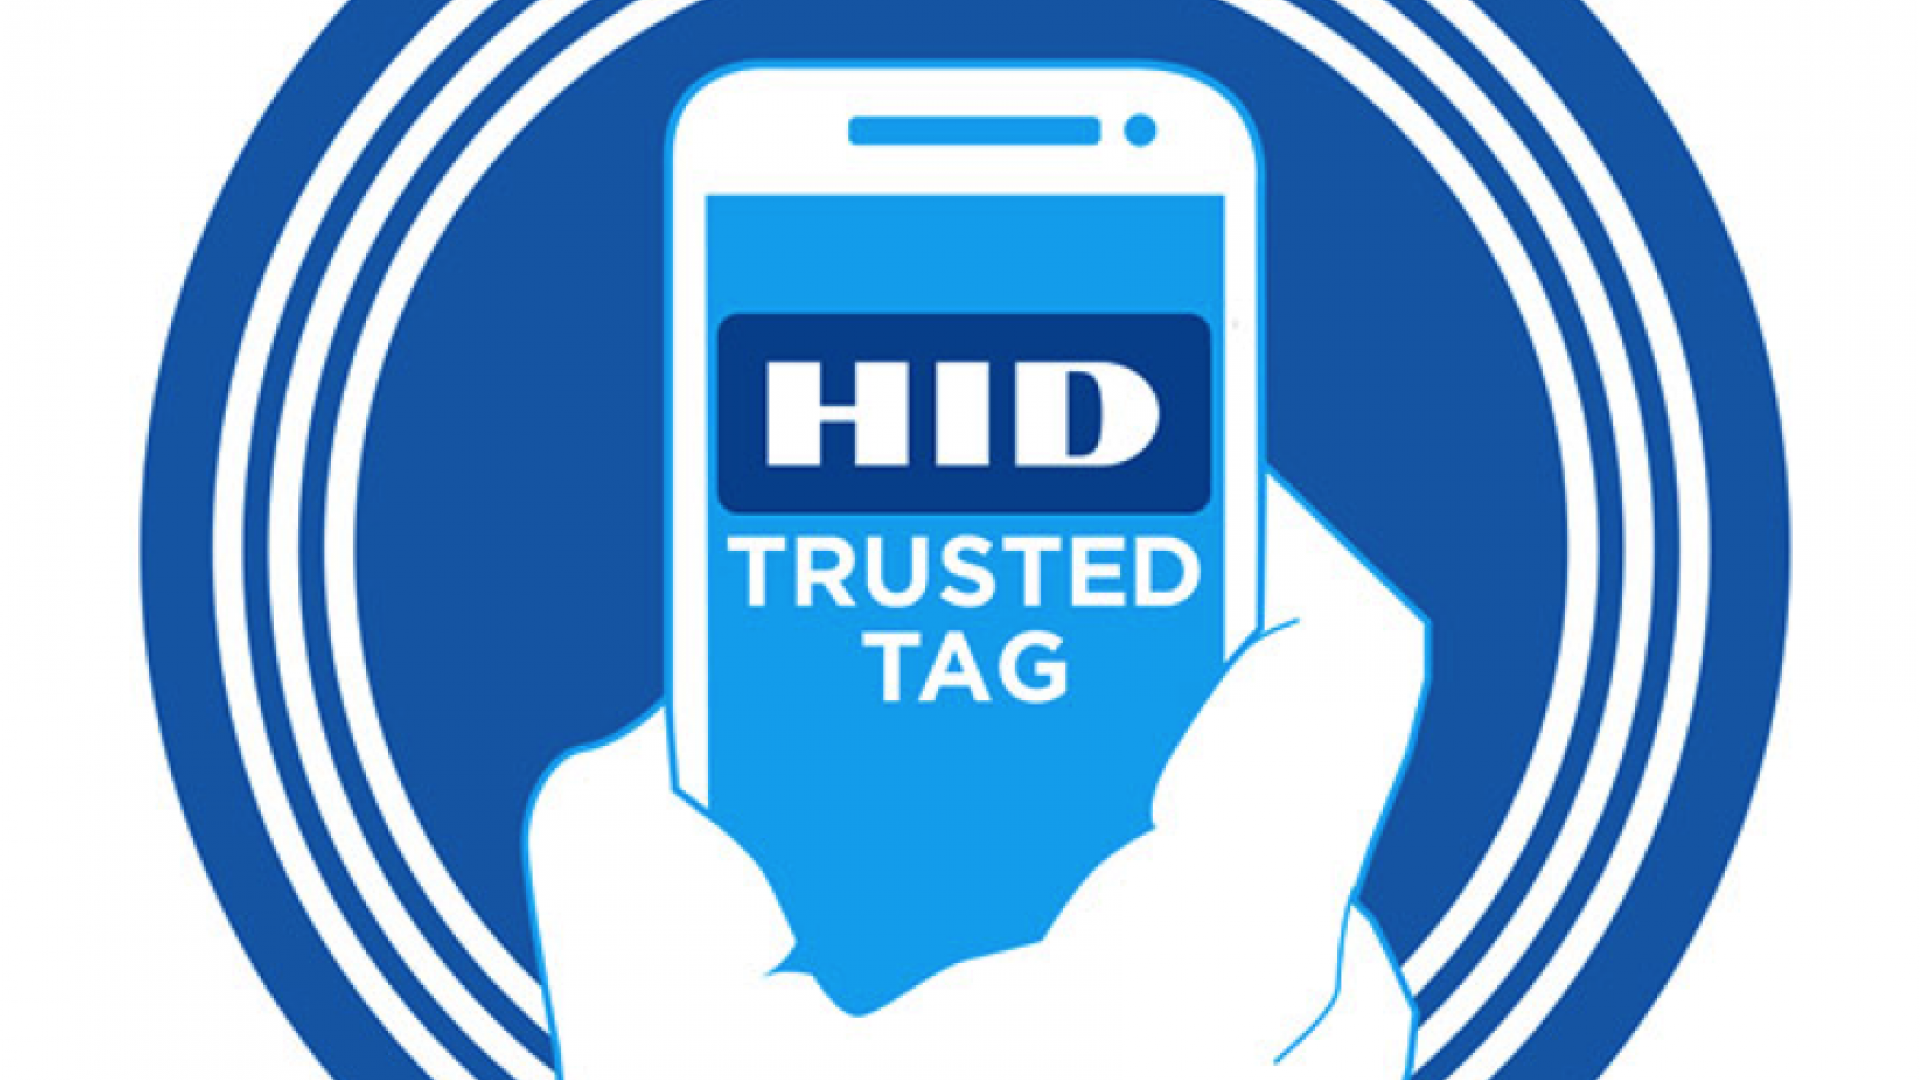 HID Trusted Tag – NFC-Tag Scans eindeutig identifizieren